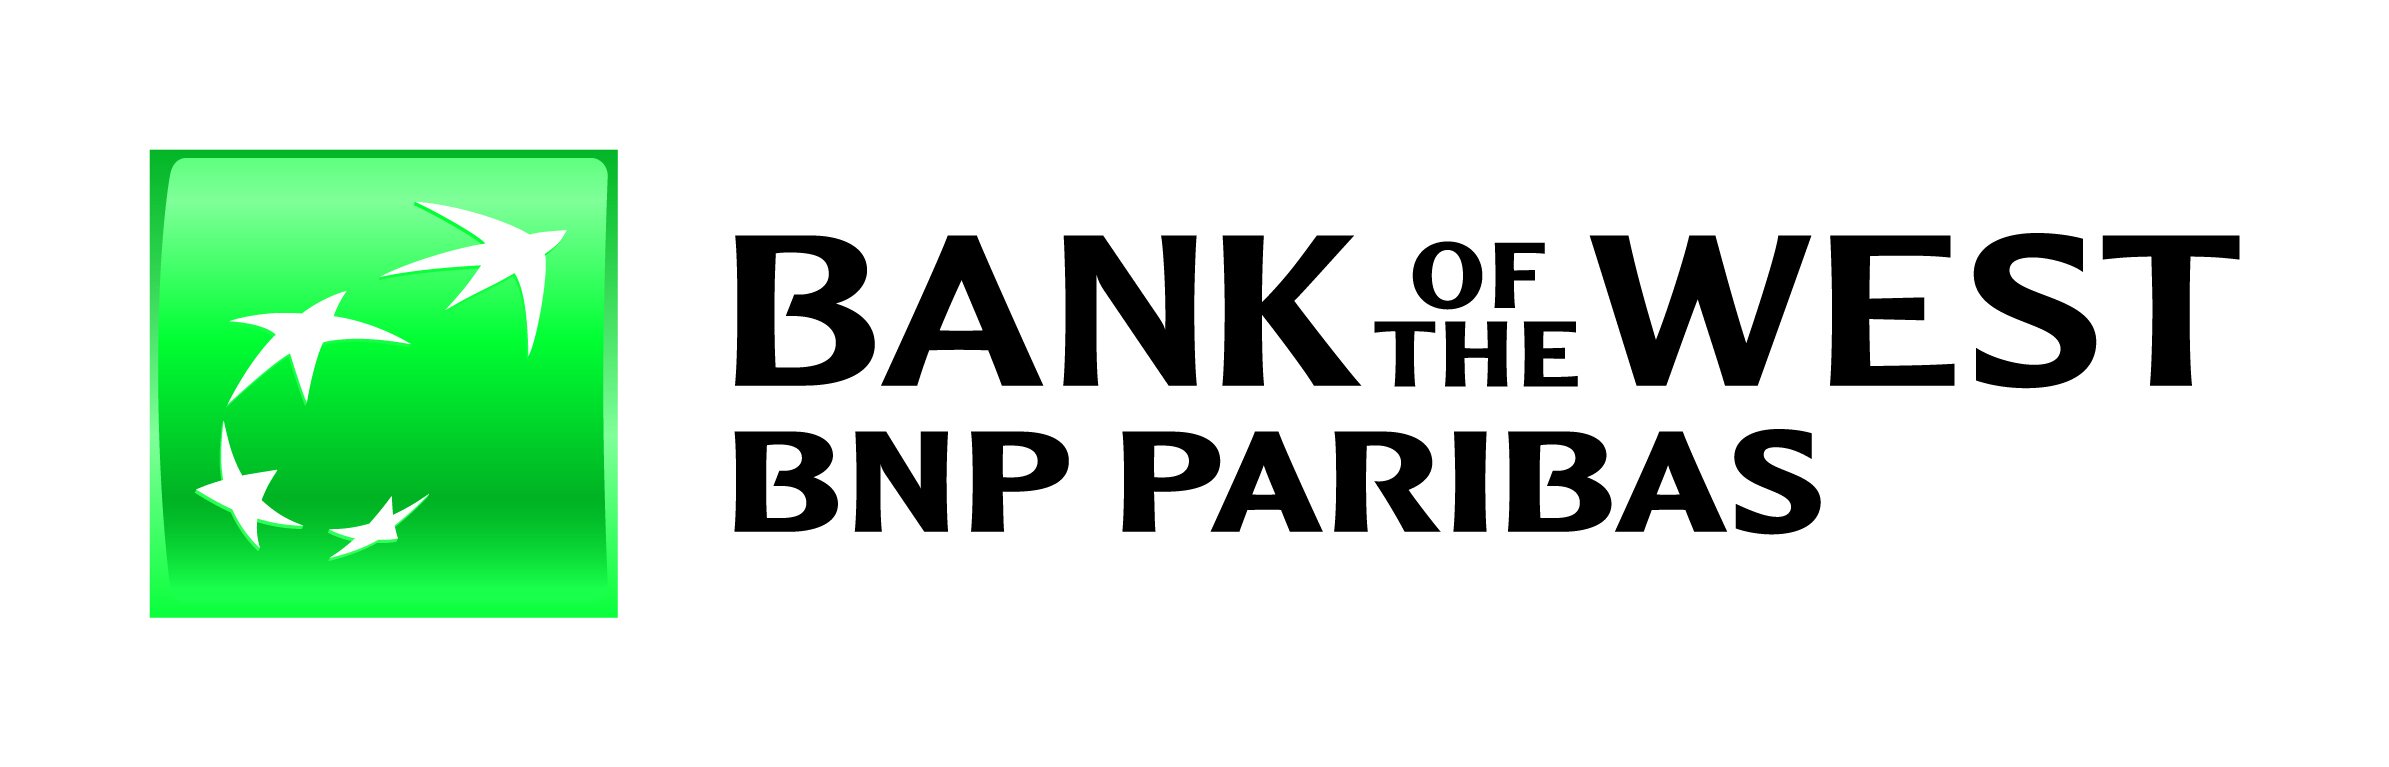 botw-bnpp-logo-color.jpeg